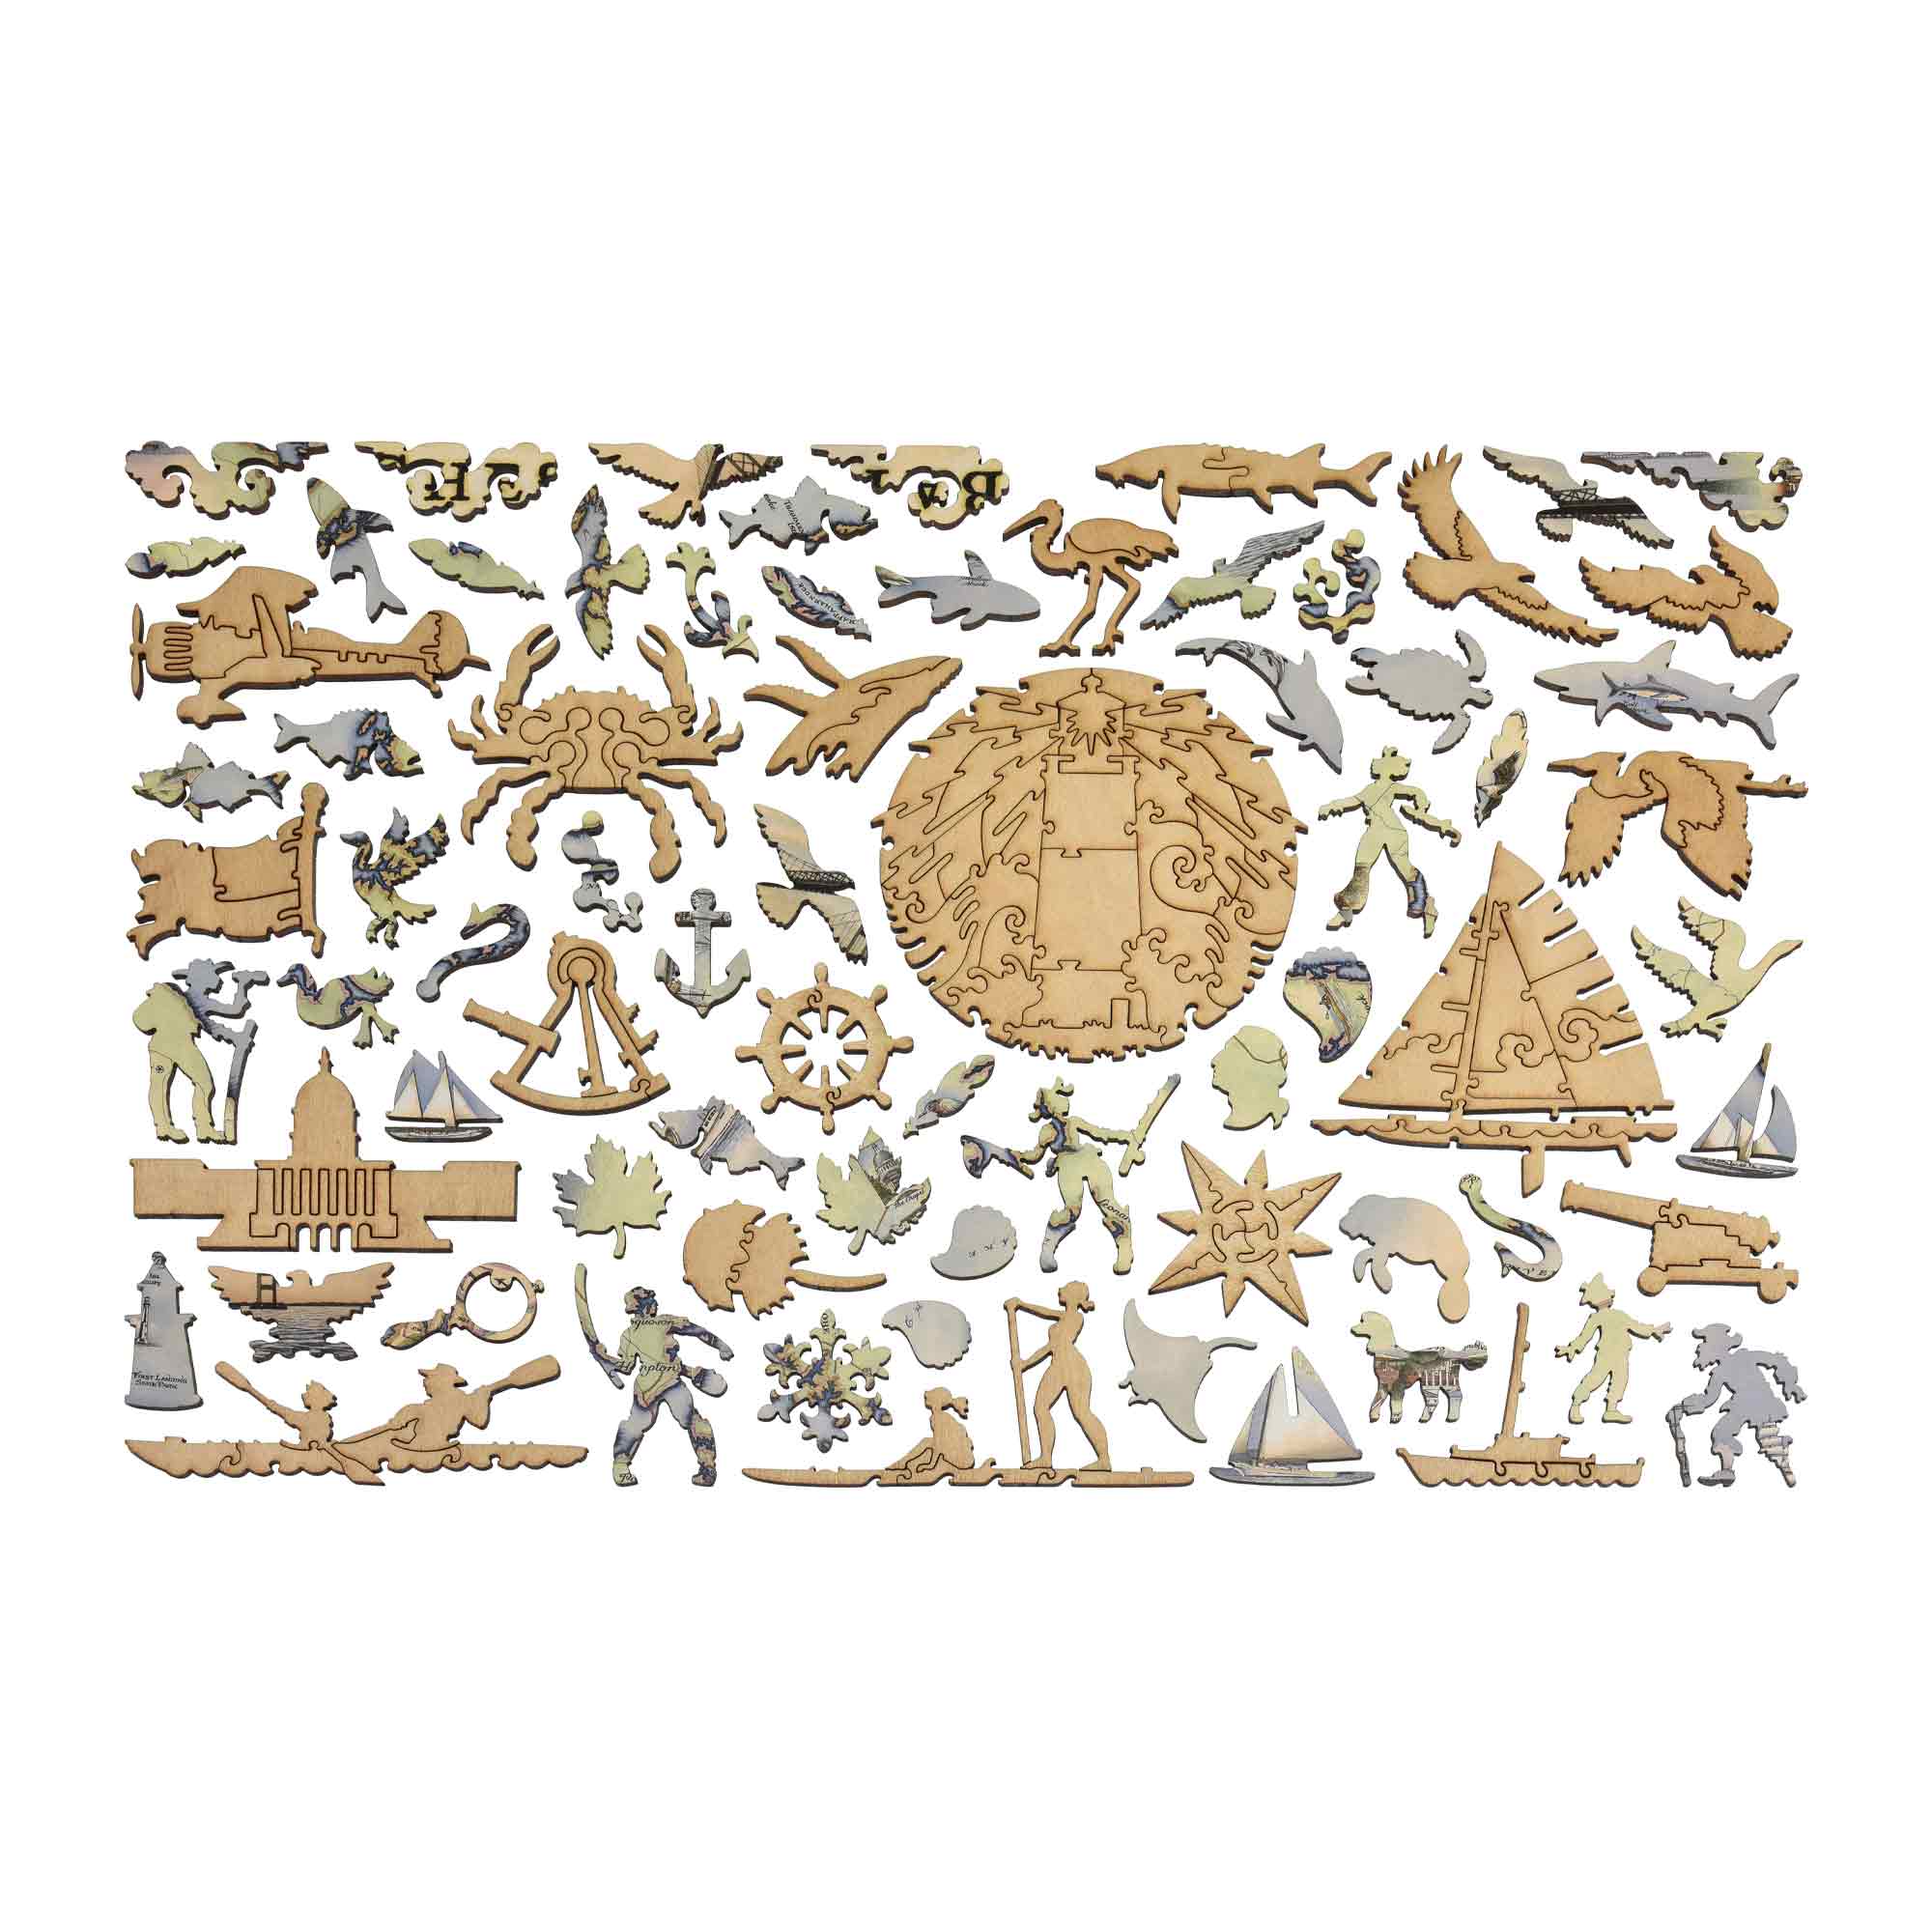 Xplorer Maps Wood Puzzle piece of a sail boat, crab, birds, canoe, buildings, flag, sea creatures, and explorers.  